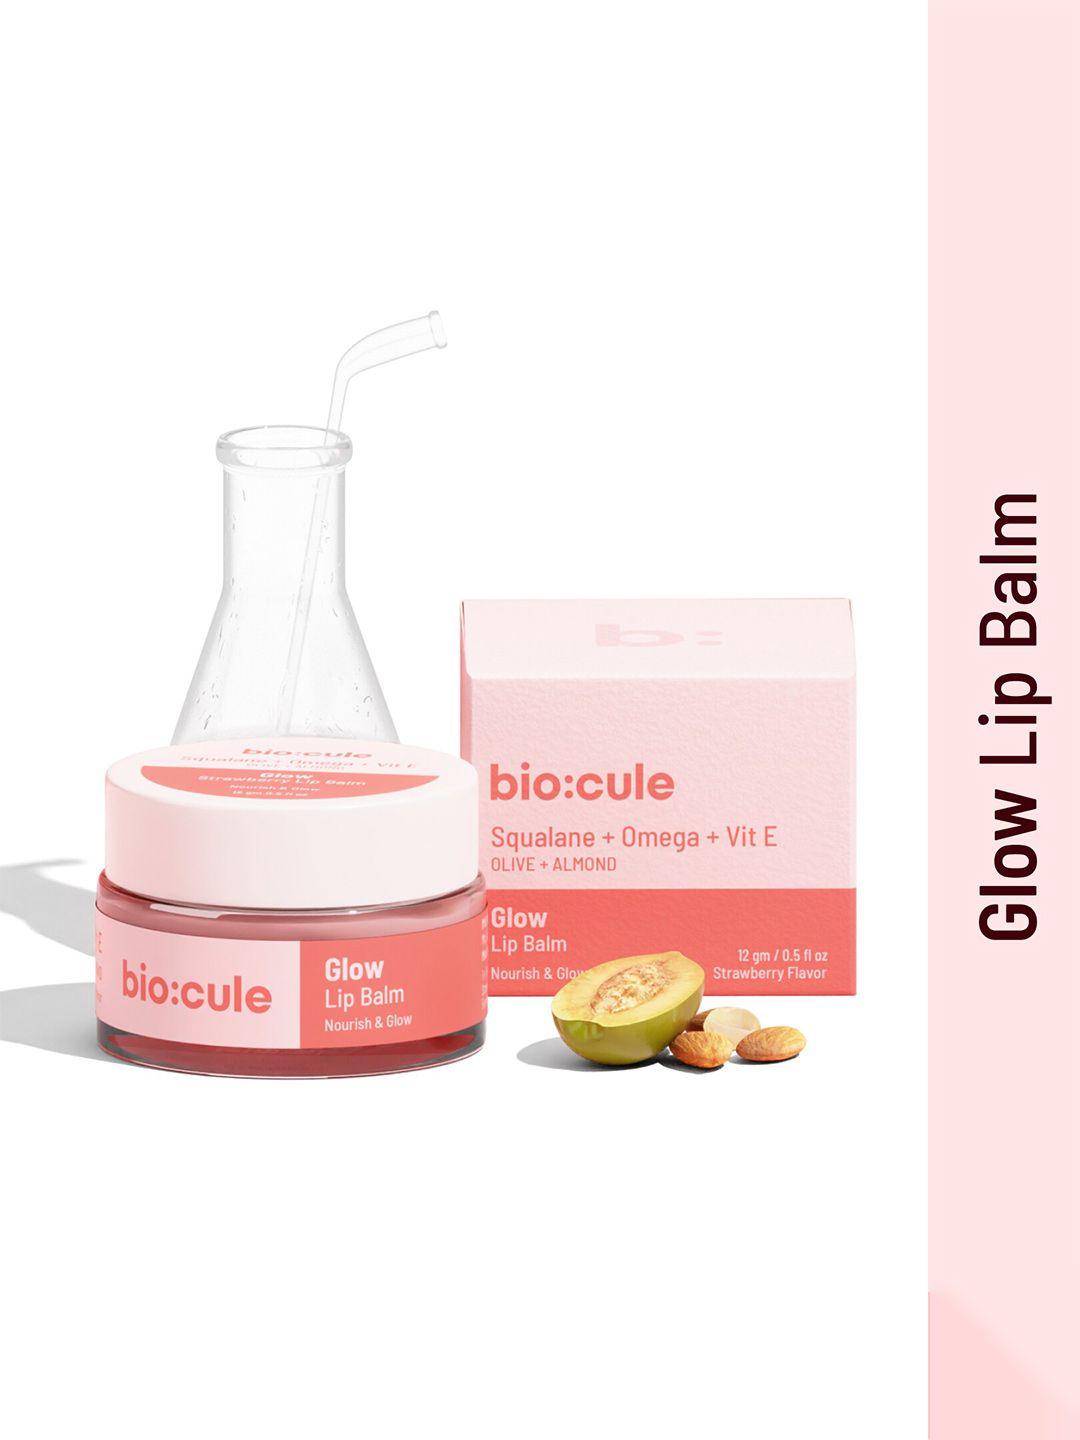 biocule glow lip balm 2g - strawberry